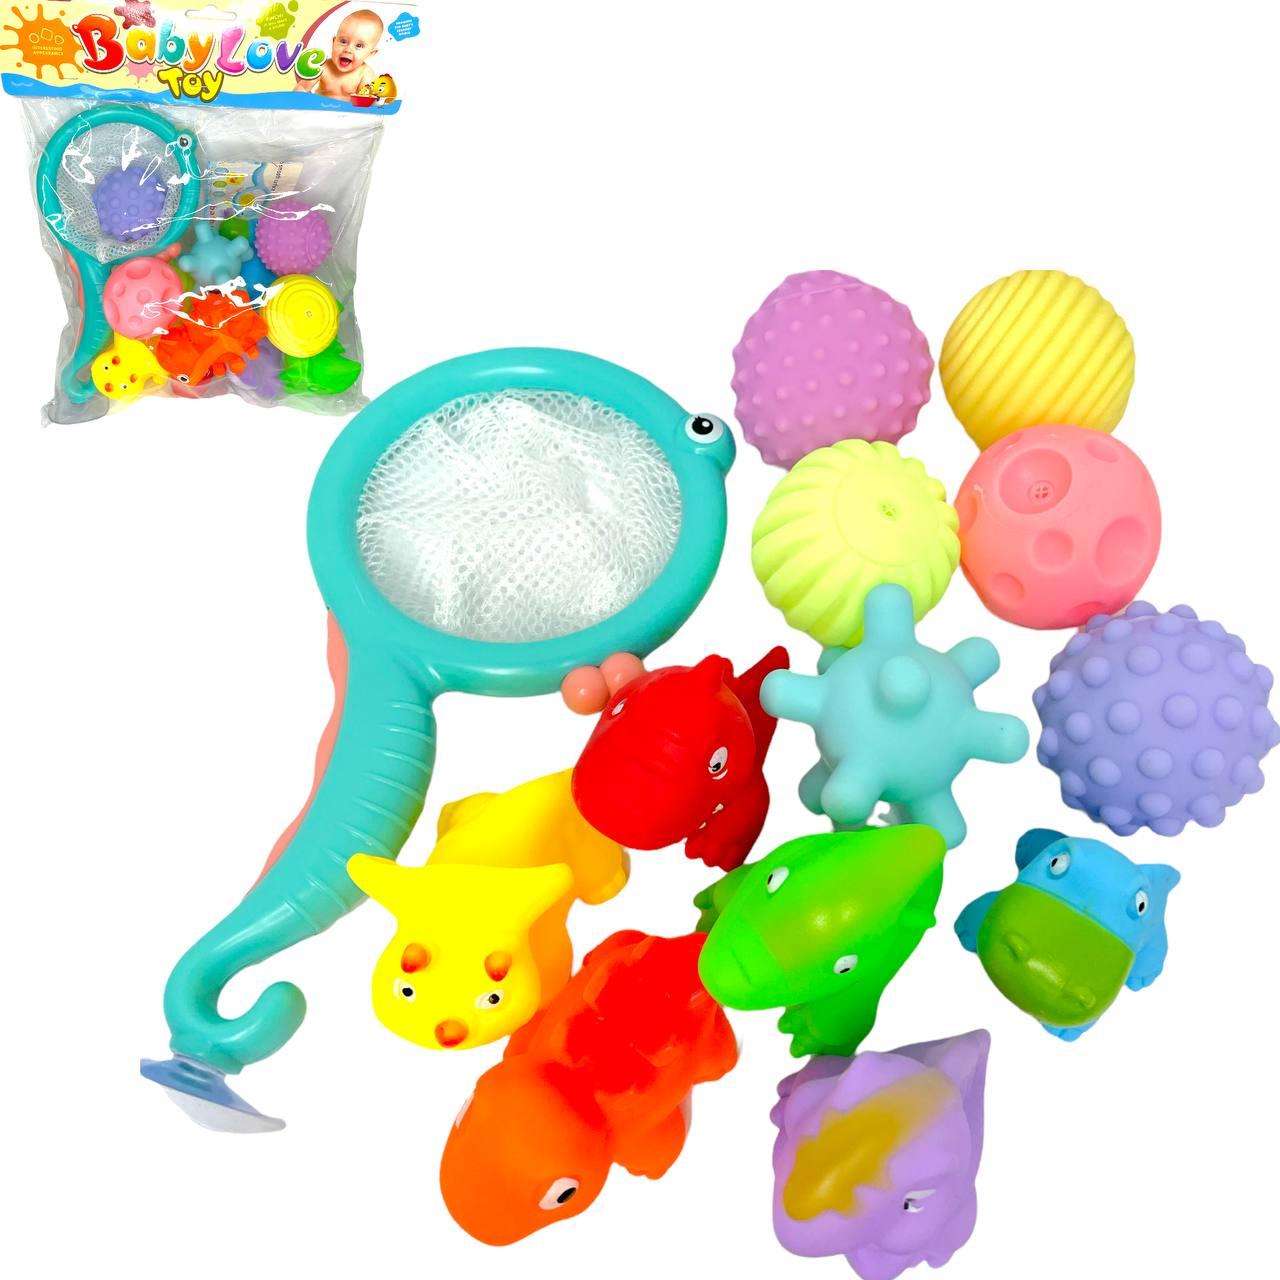 Baby Love toy для купания мяч,динозавр,сачок пищалки в пакете 13 предметов, 33*31см